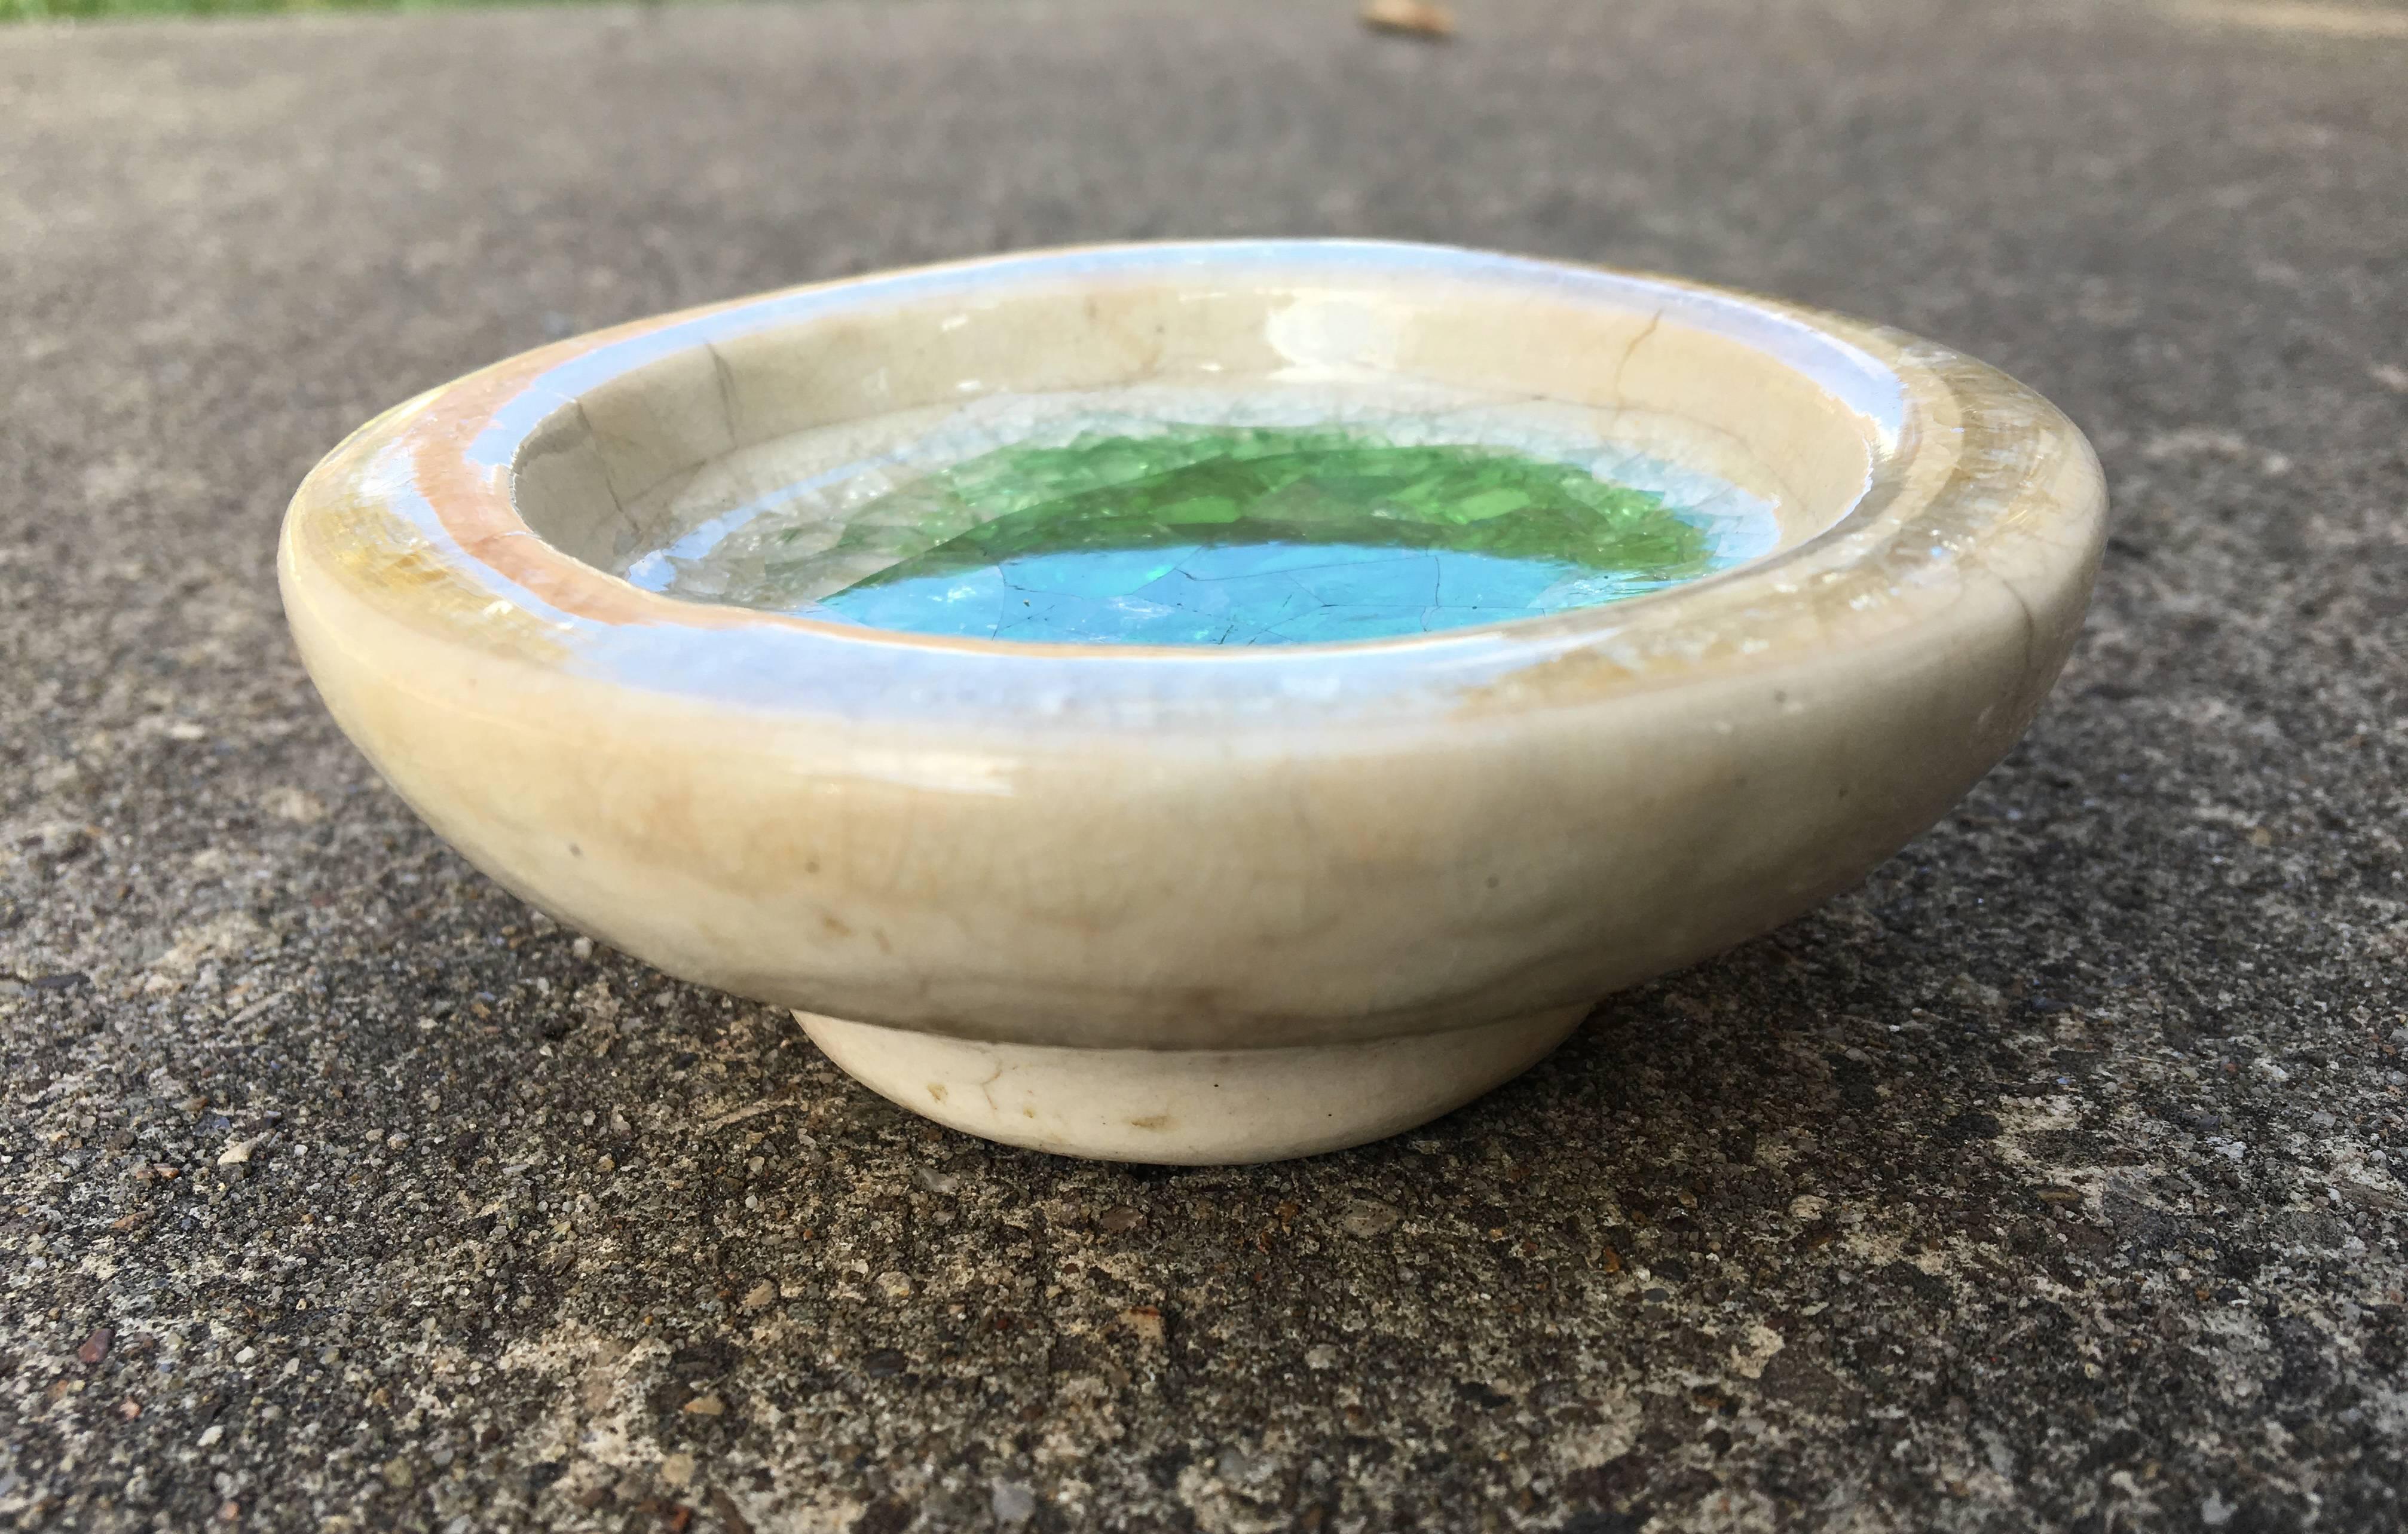 waylande gregory bowl